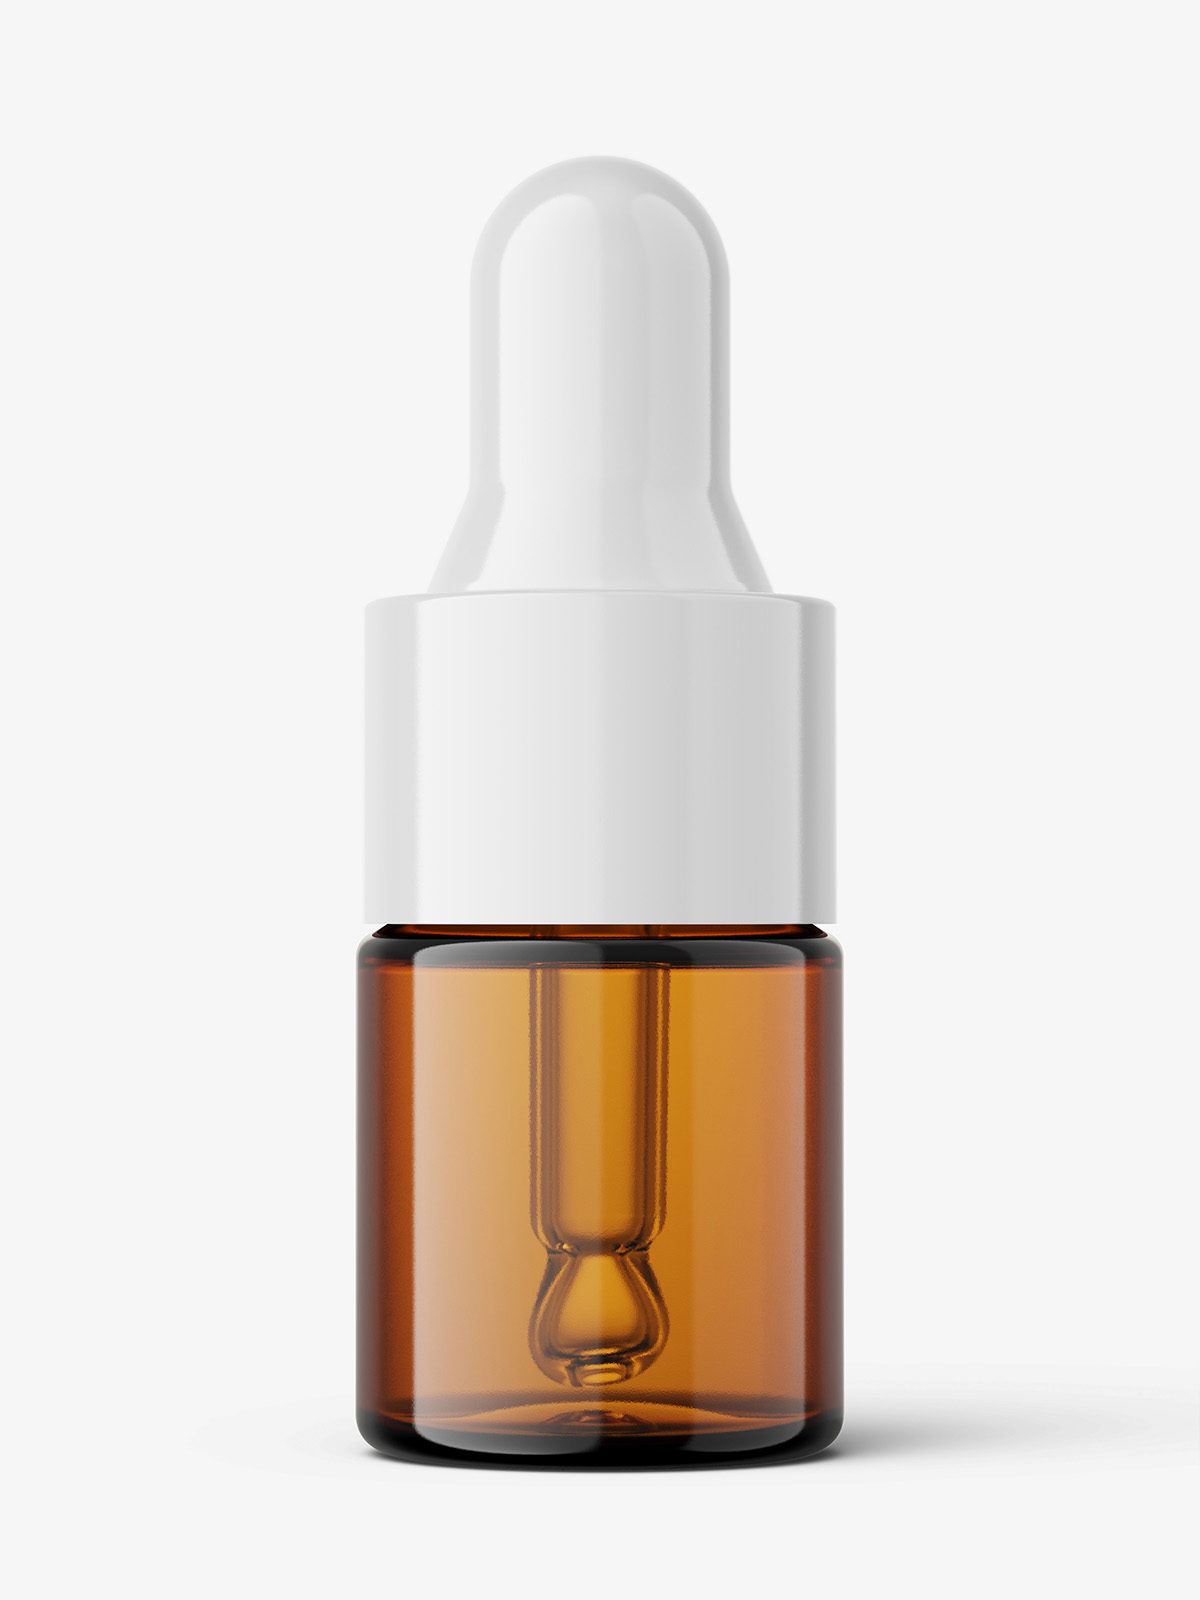 Download Small dropper bottle mockup / amber - Smarty Mockups